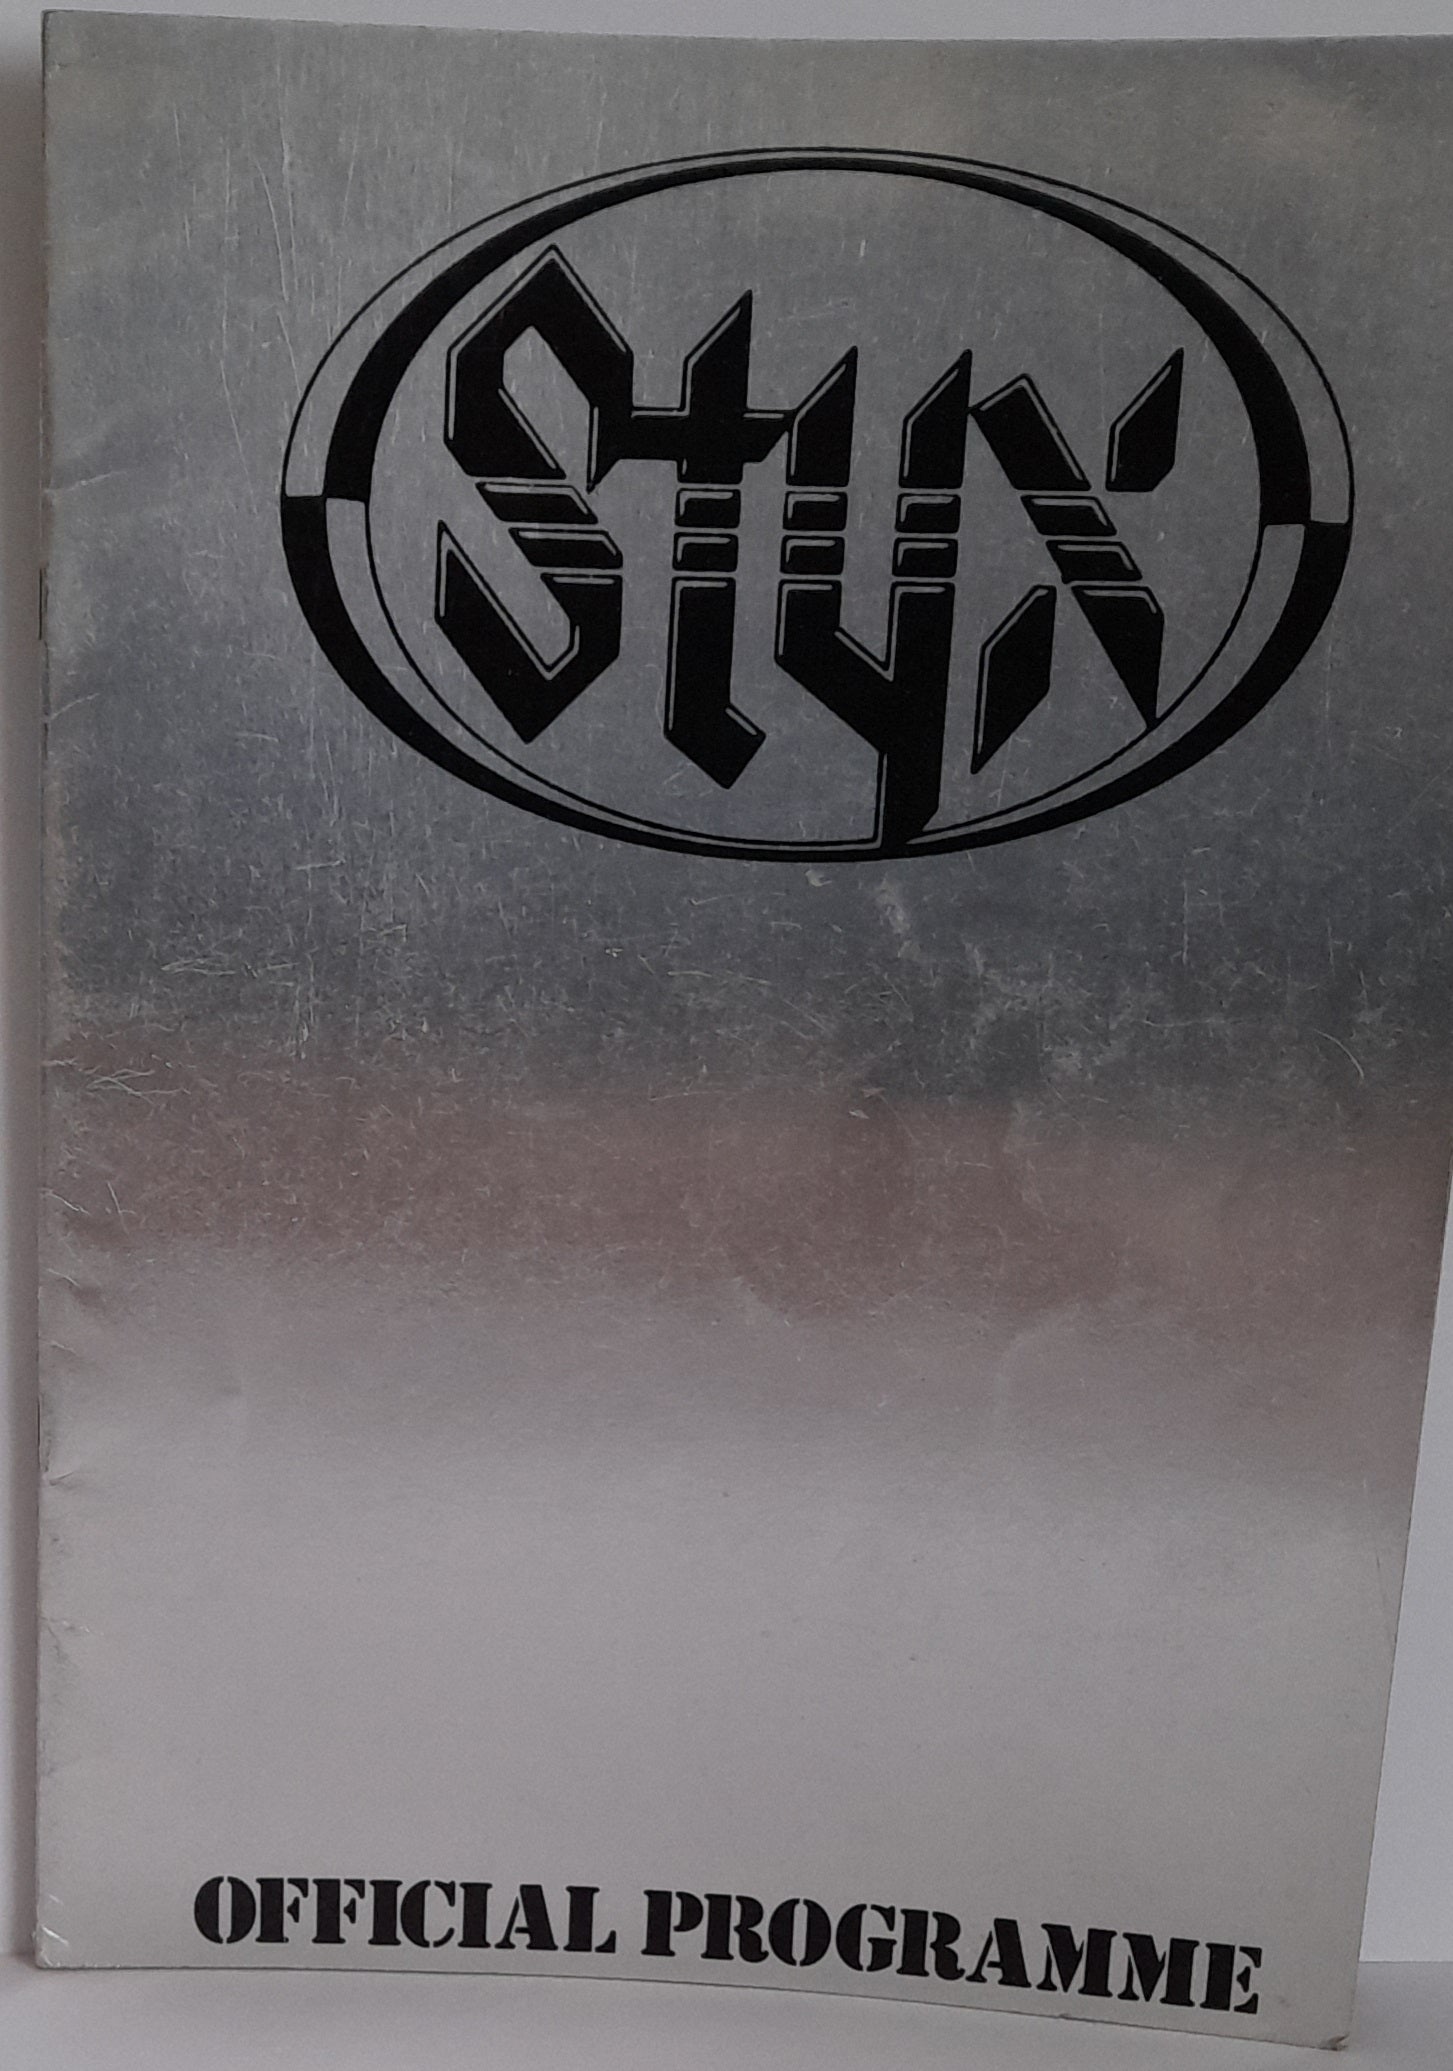 Styx 1981 Tour Concert Programme